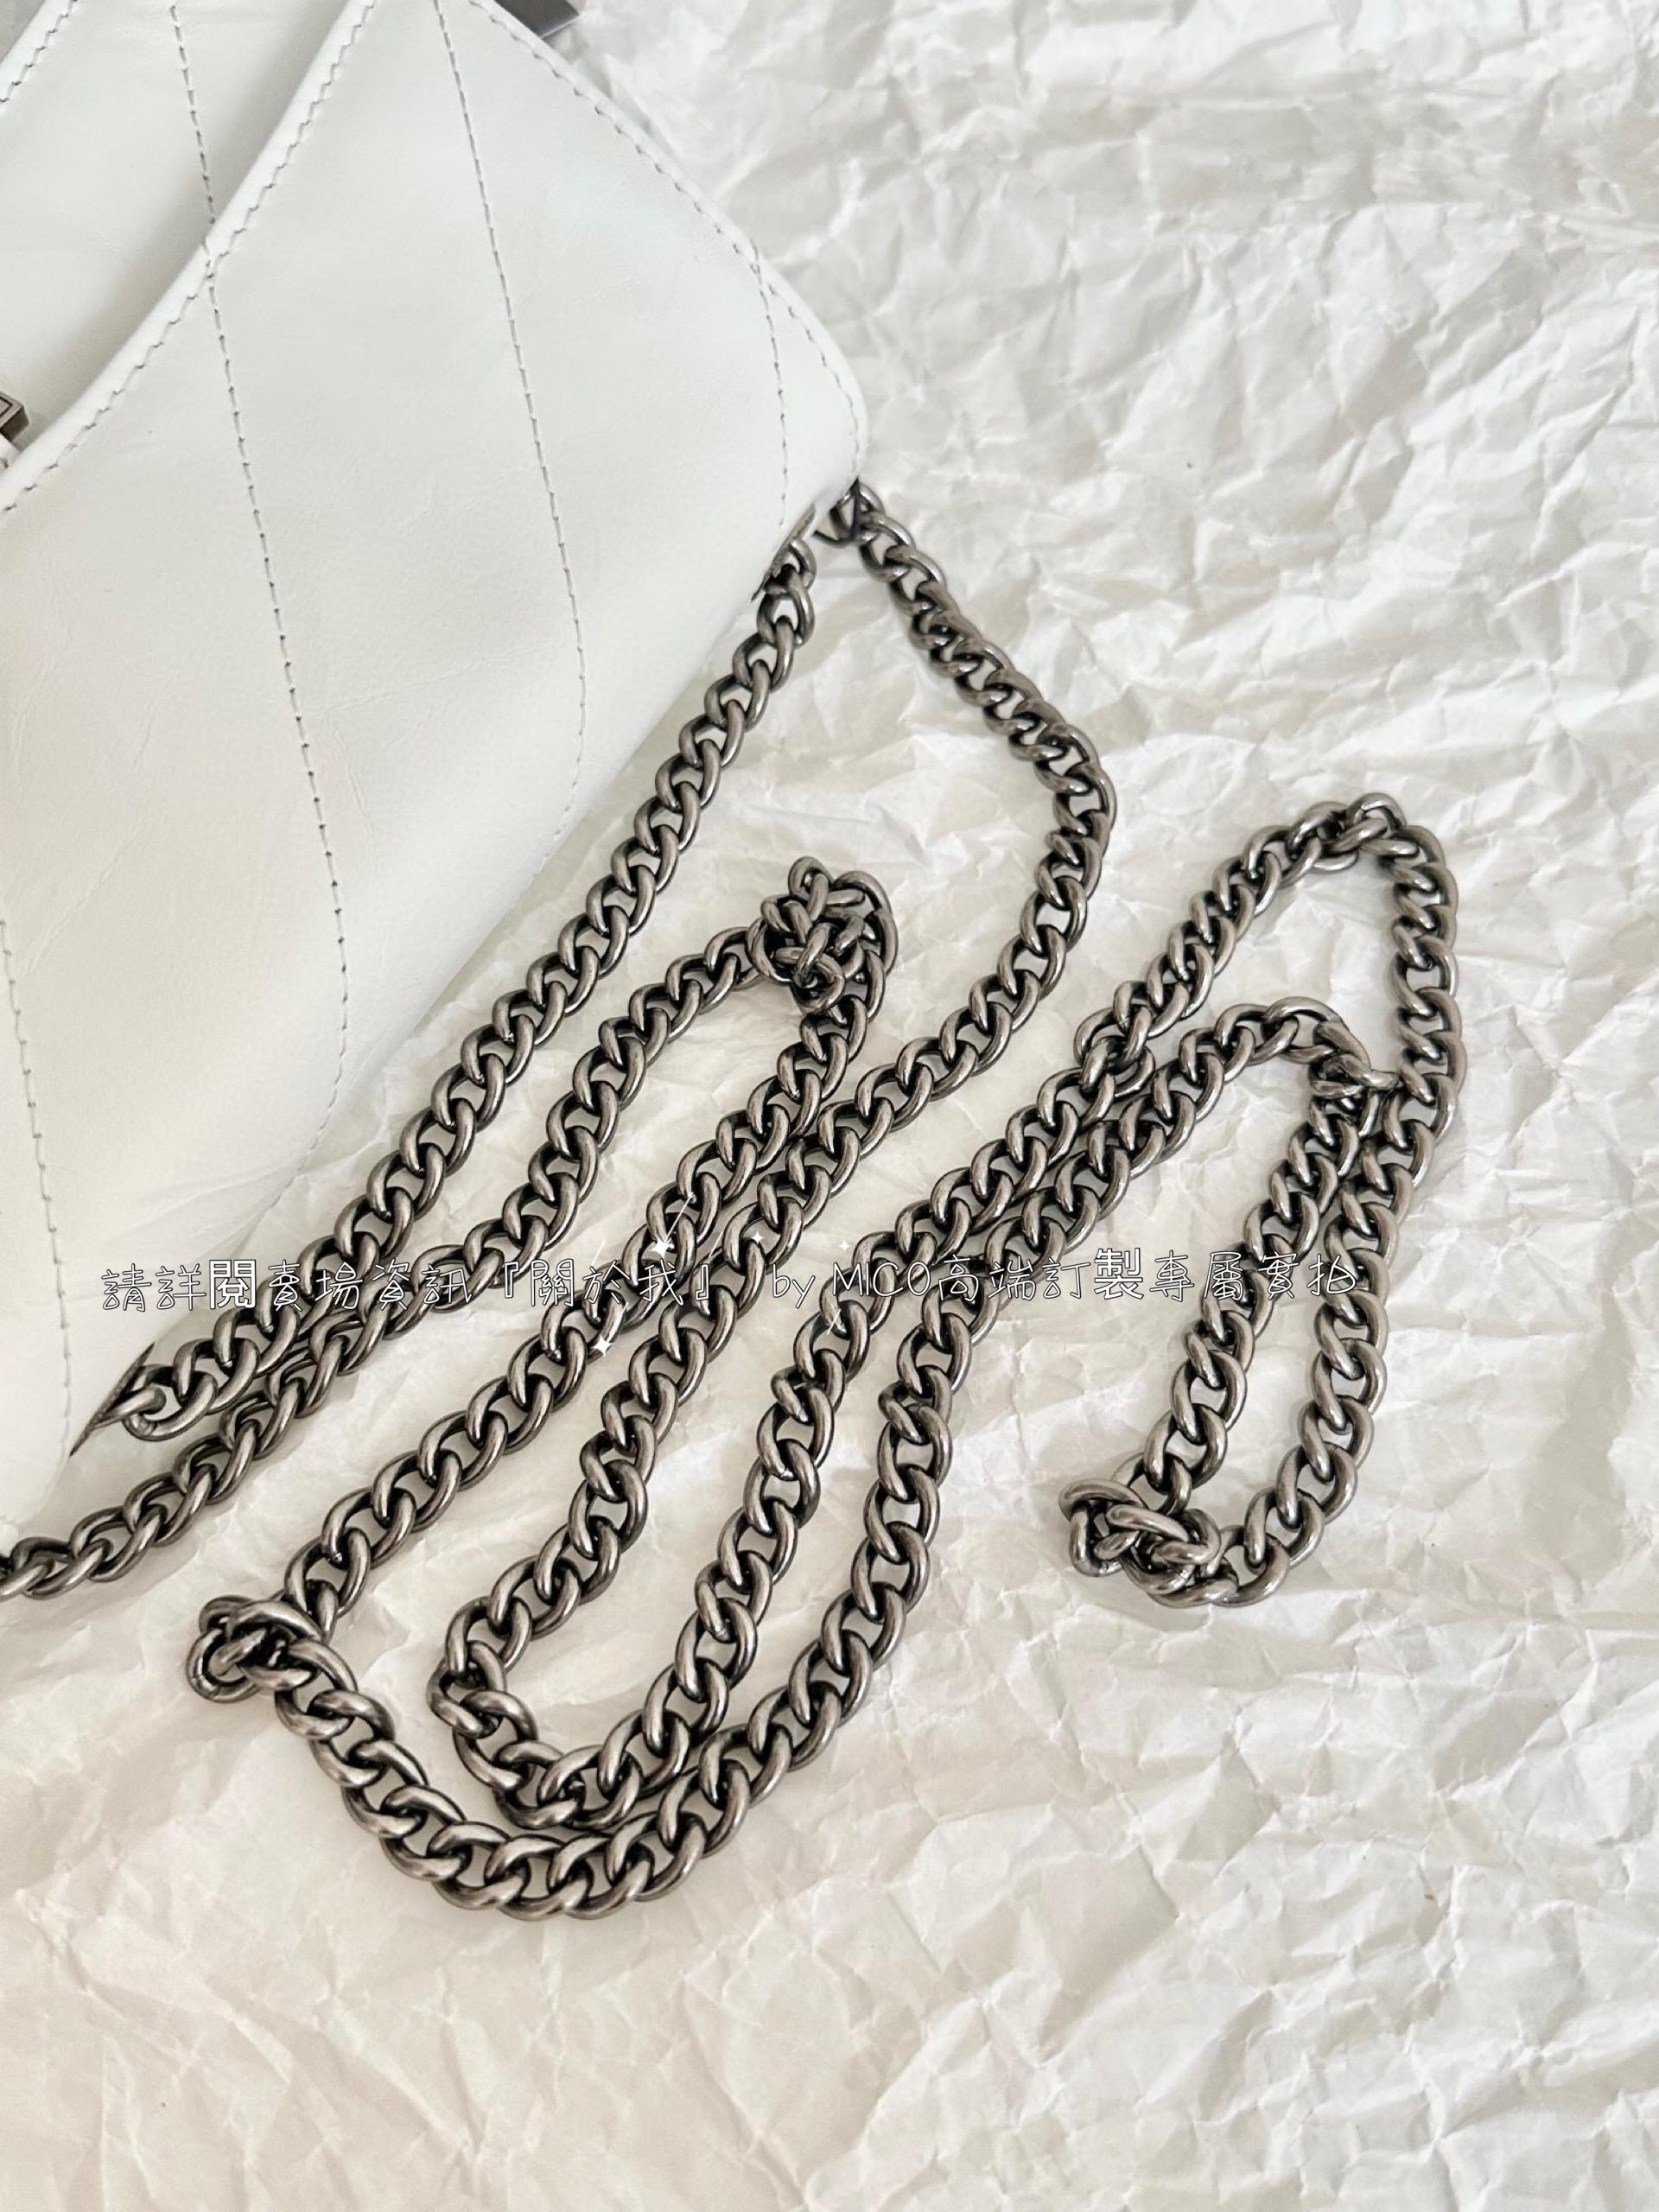 BALENCIAGA Crush XS Chain Bag 白色/銀釦/沙漏包 尺寸21.8×9.9×4.8cm